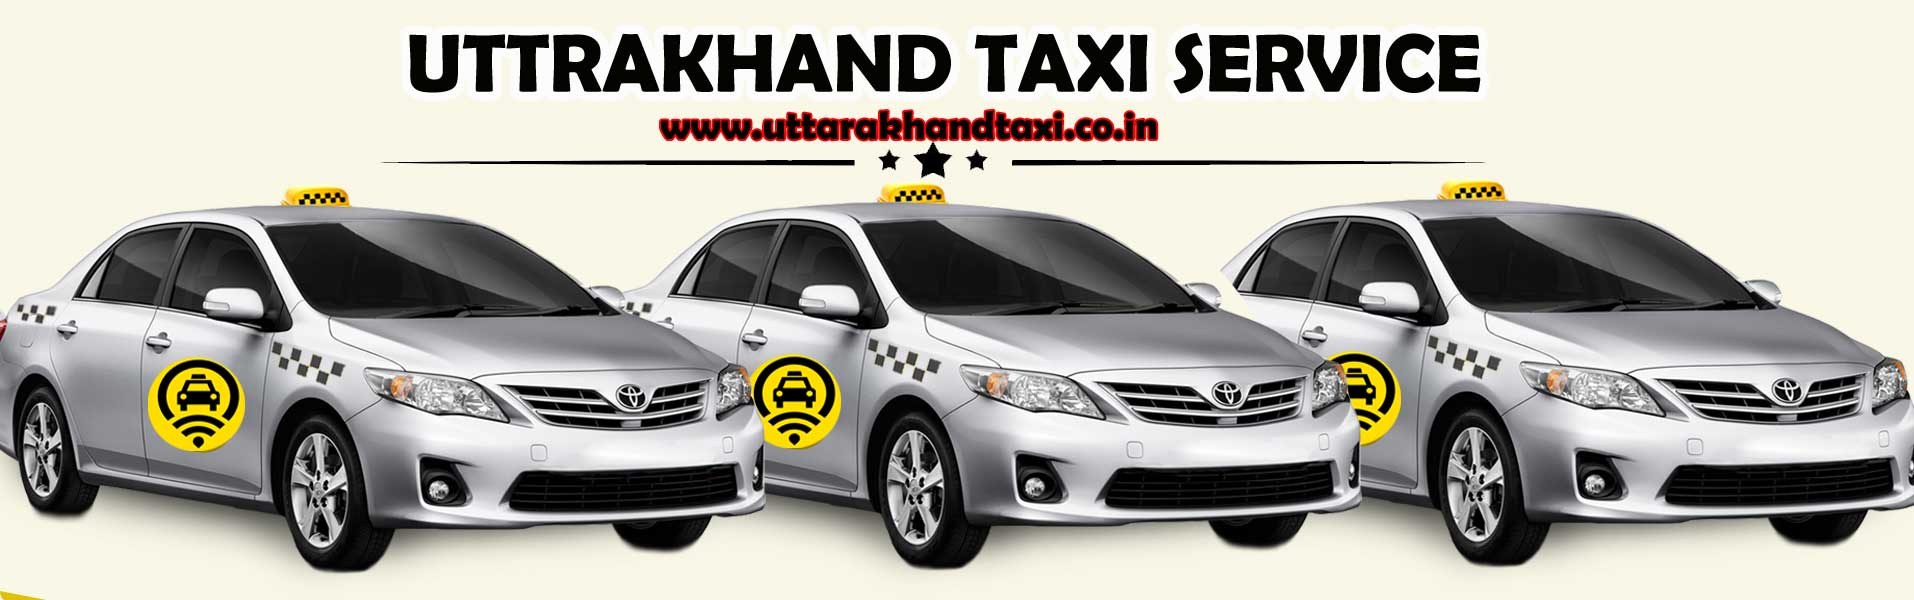 Uttarakhand taxi Service Banner